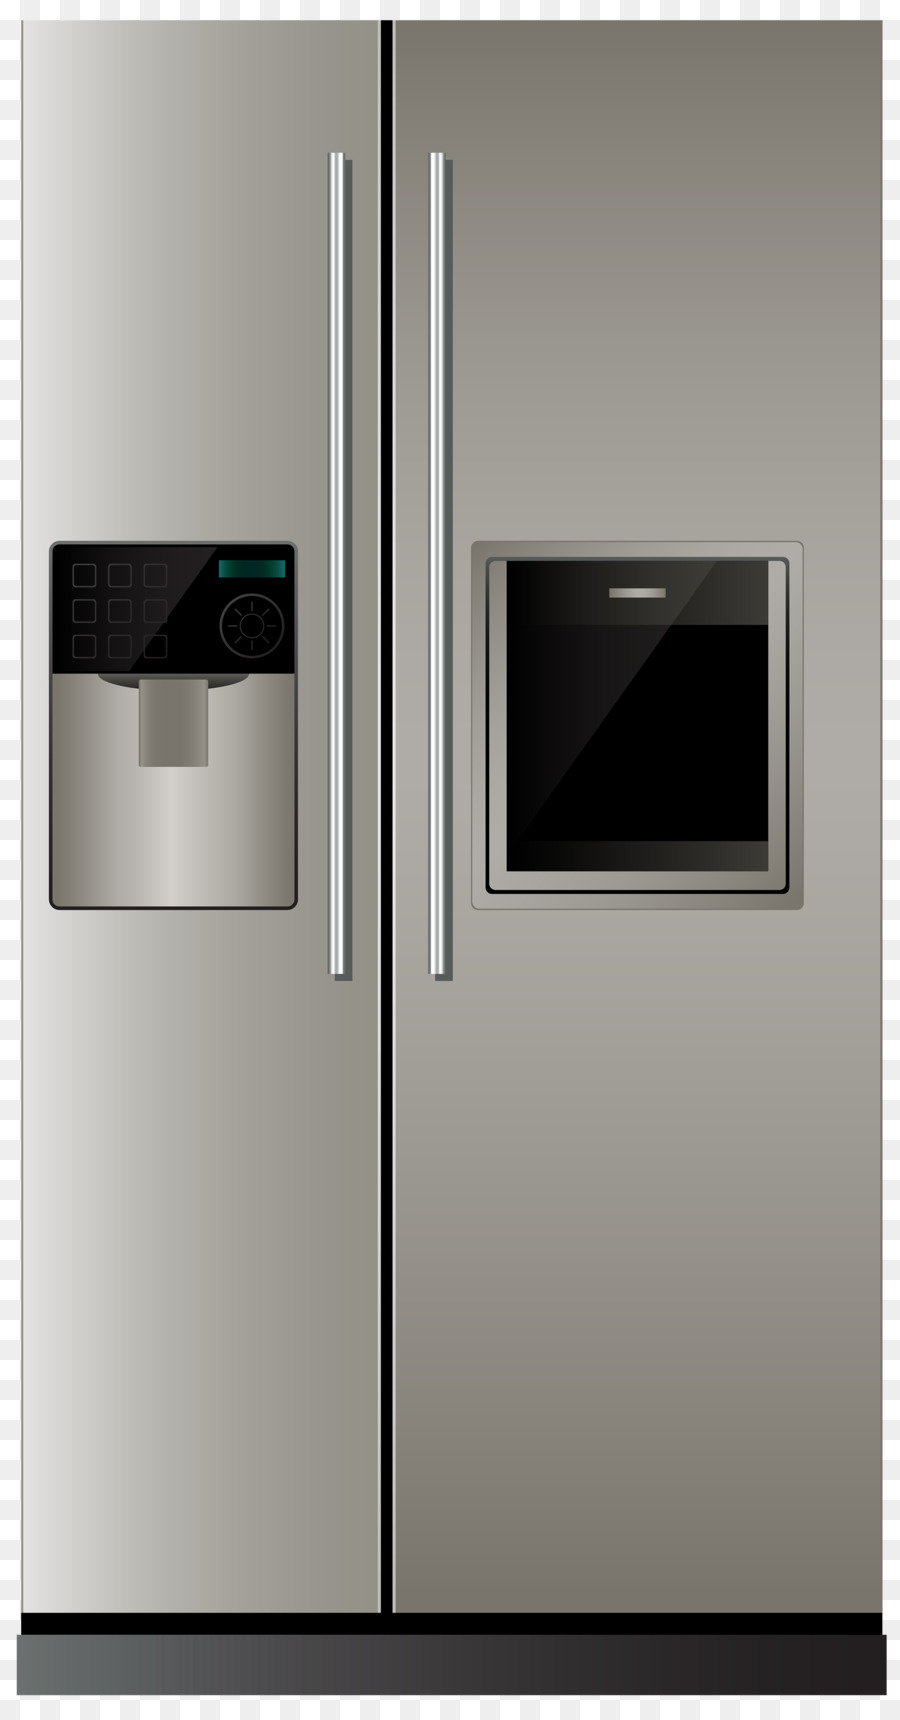 refrigerator clipart appliance